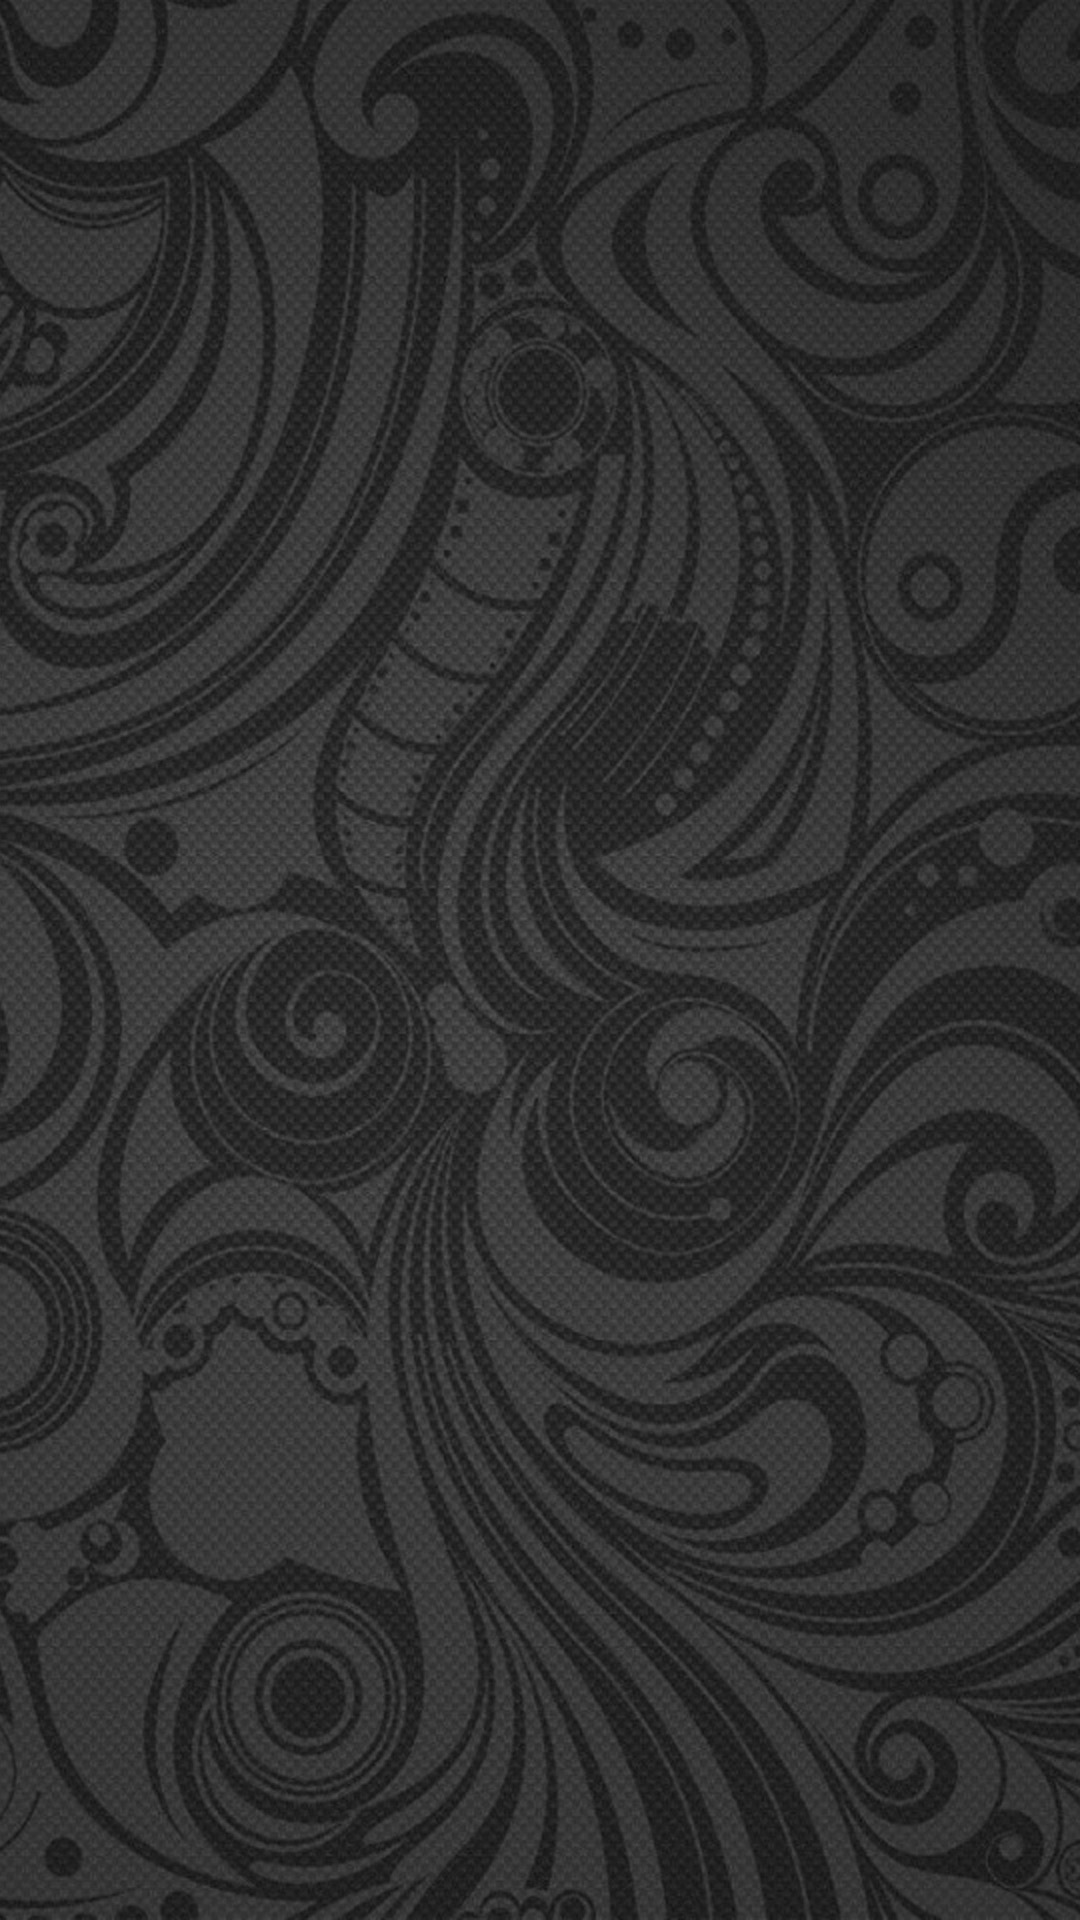 Background Pattern HD Wallpaper iPhone 6 plus - wallpapersmobile.net